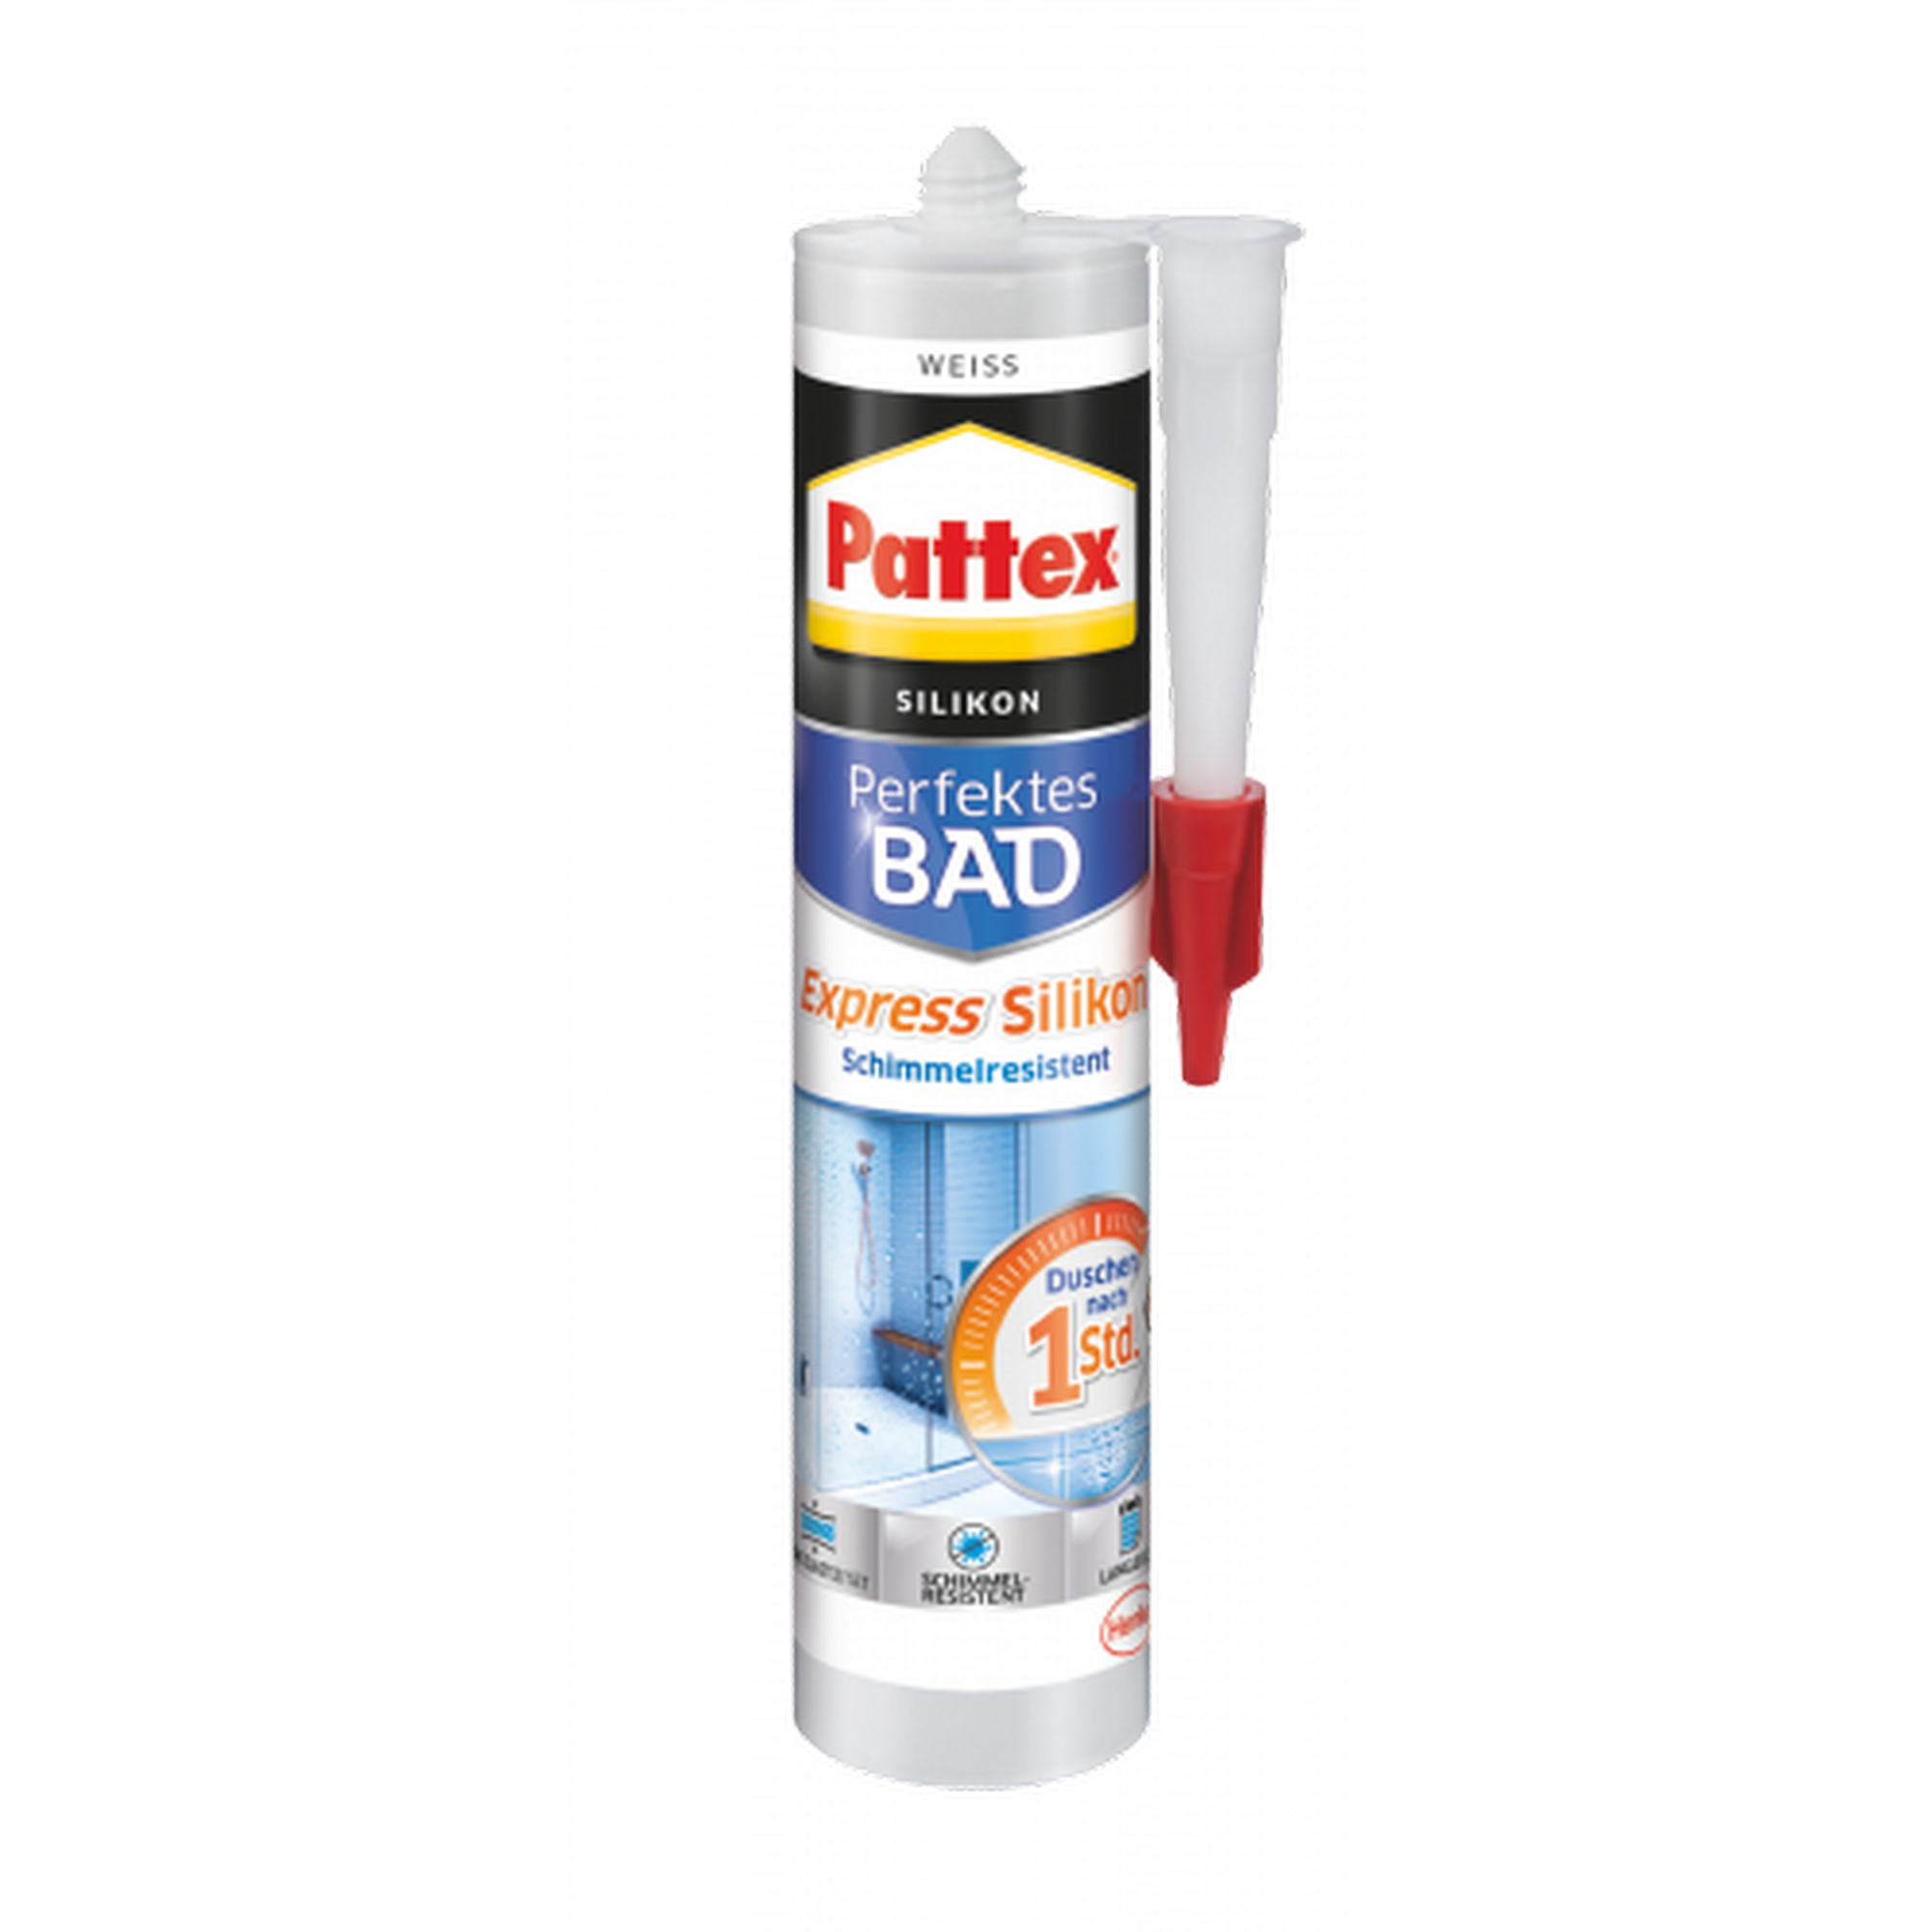 Pattex Express Silikon "Perfektes Bad" transparent 300 ml